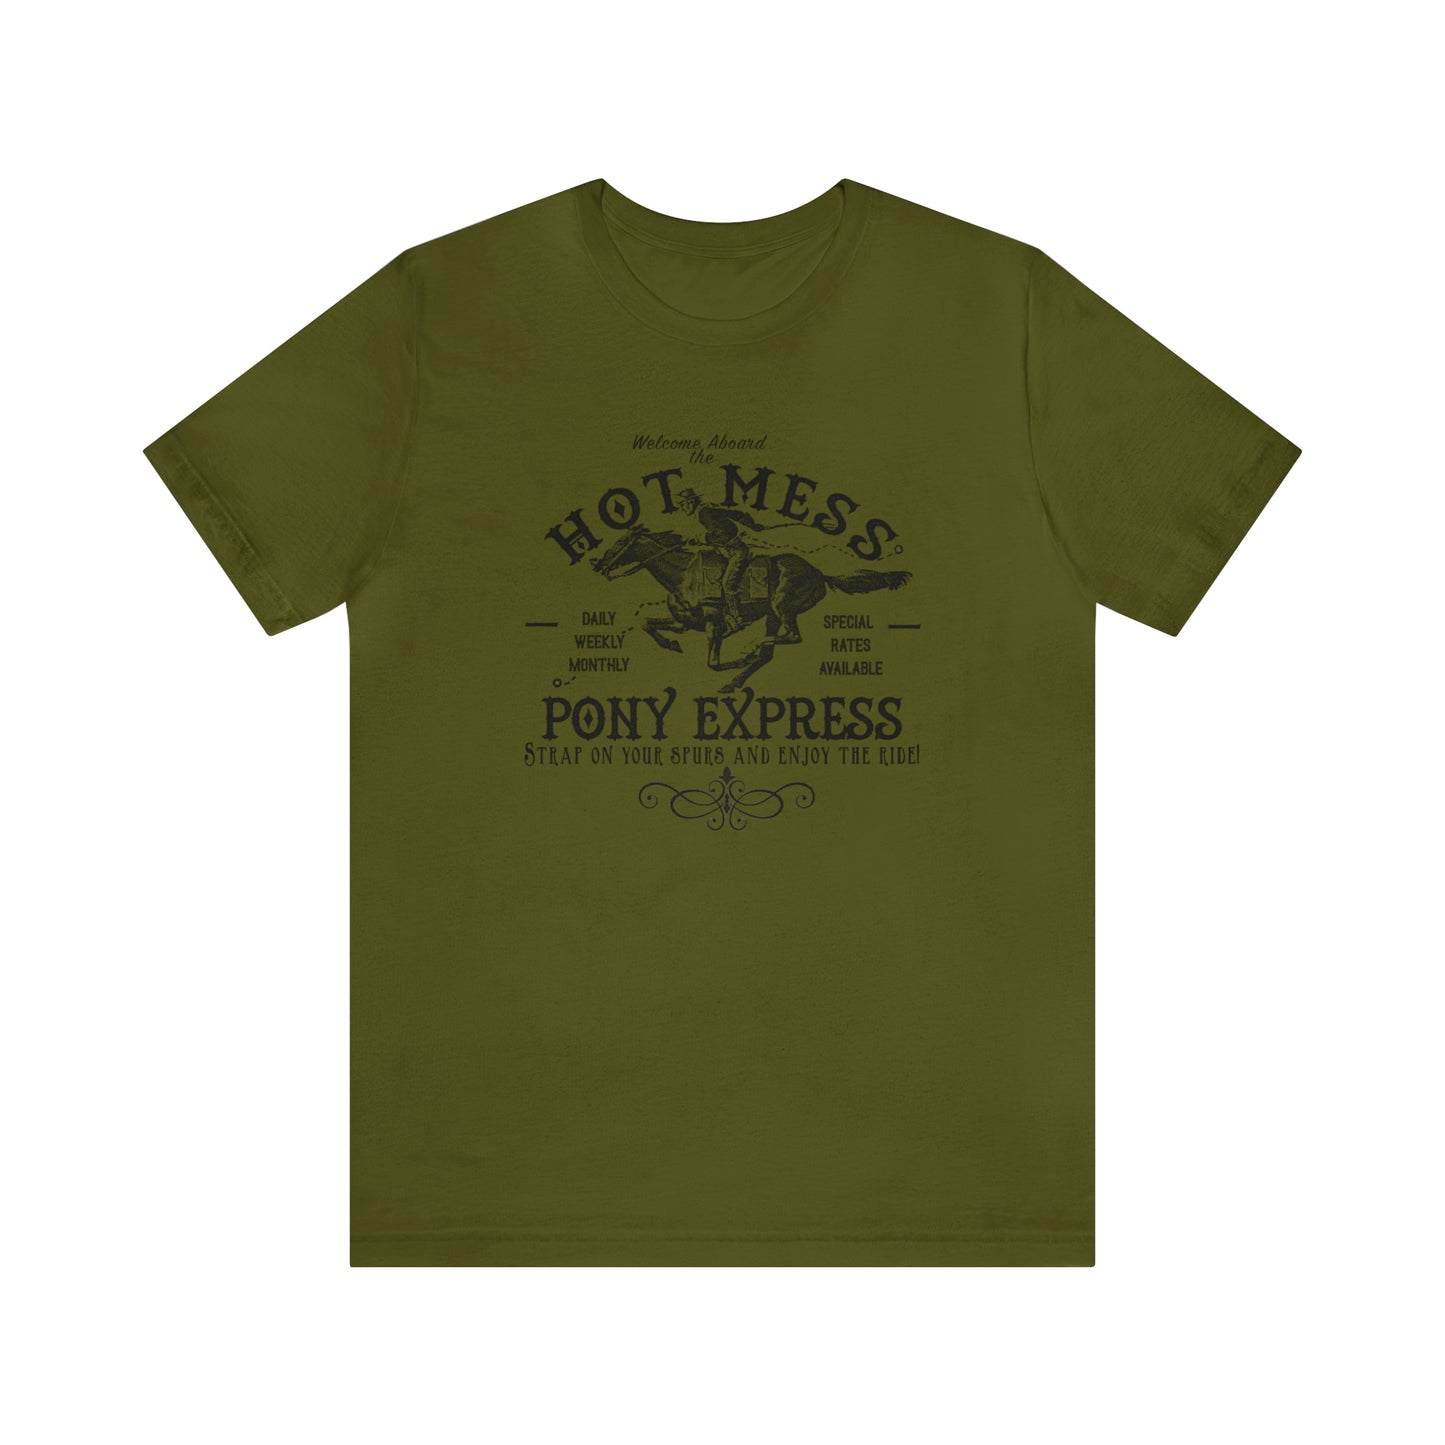 Hot Mess Pony Express Super Soft Tee